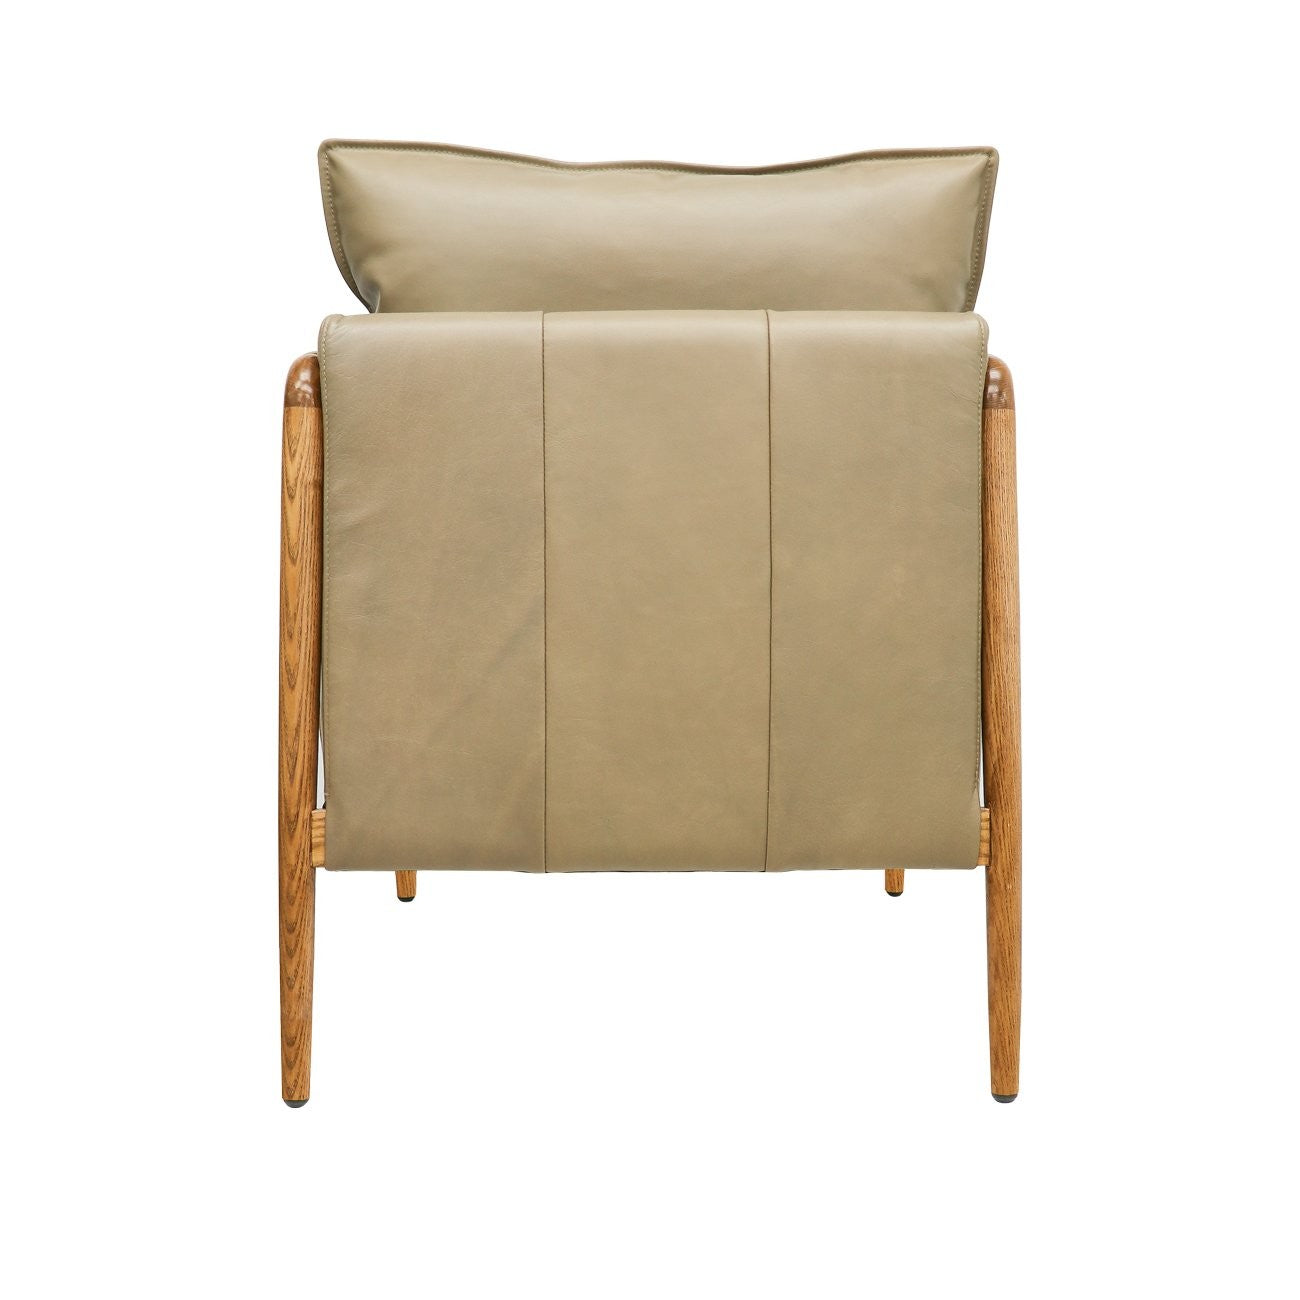 Conan Leather Armchair - Beige